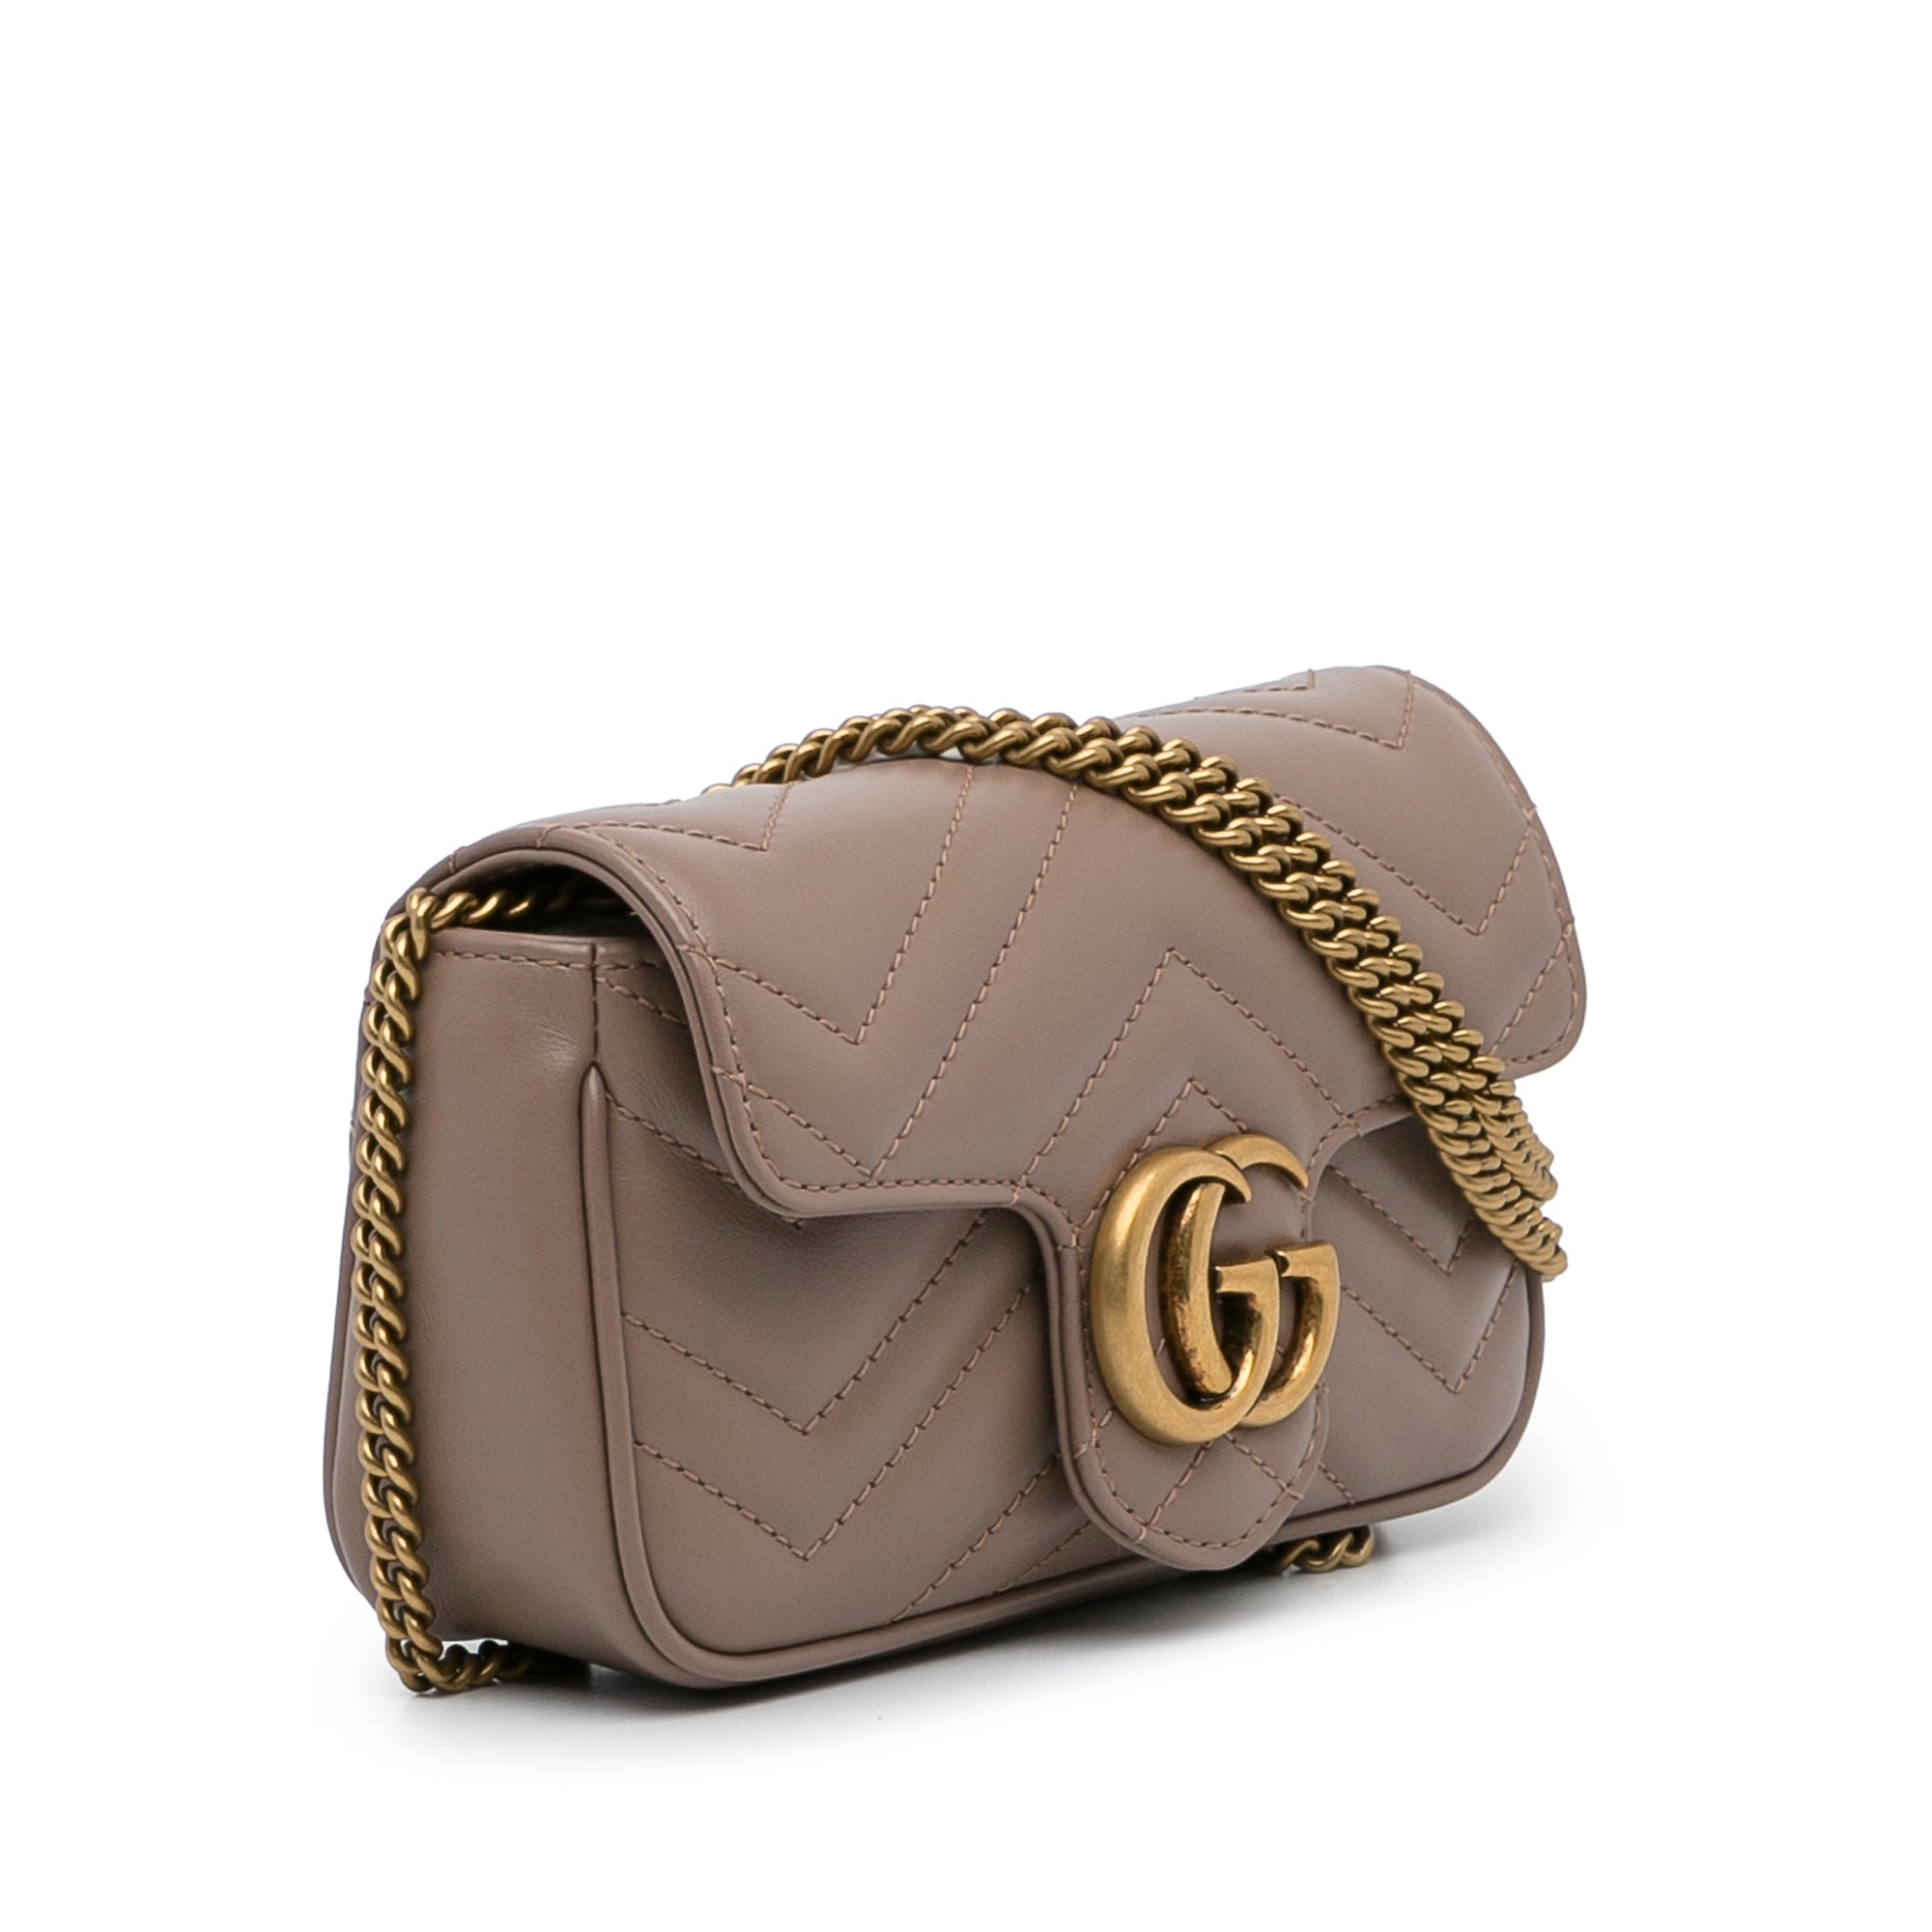 Gucci Super Mini Gg Marmont Leather Bag in Brown